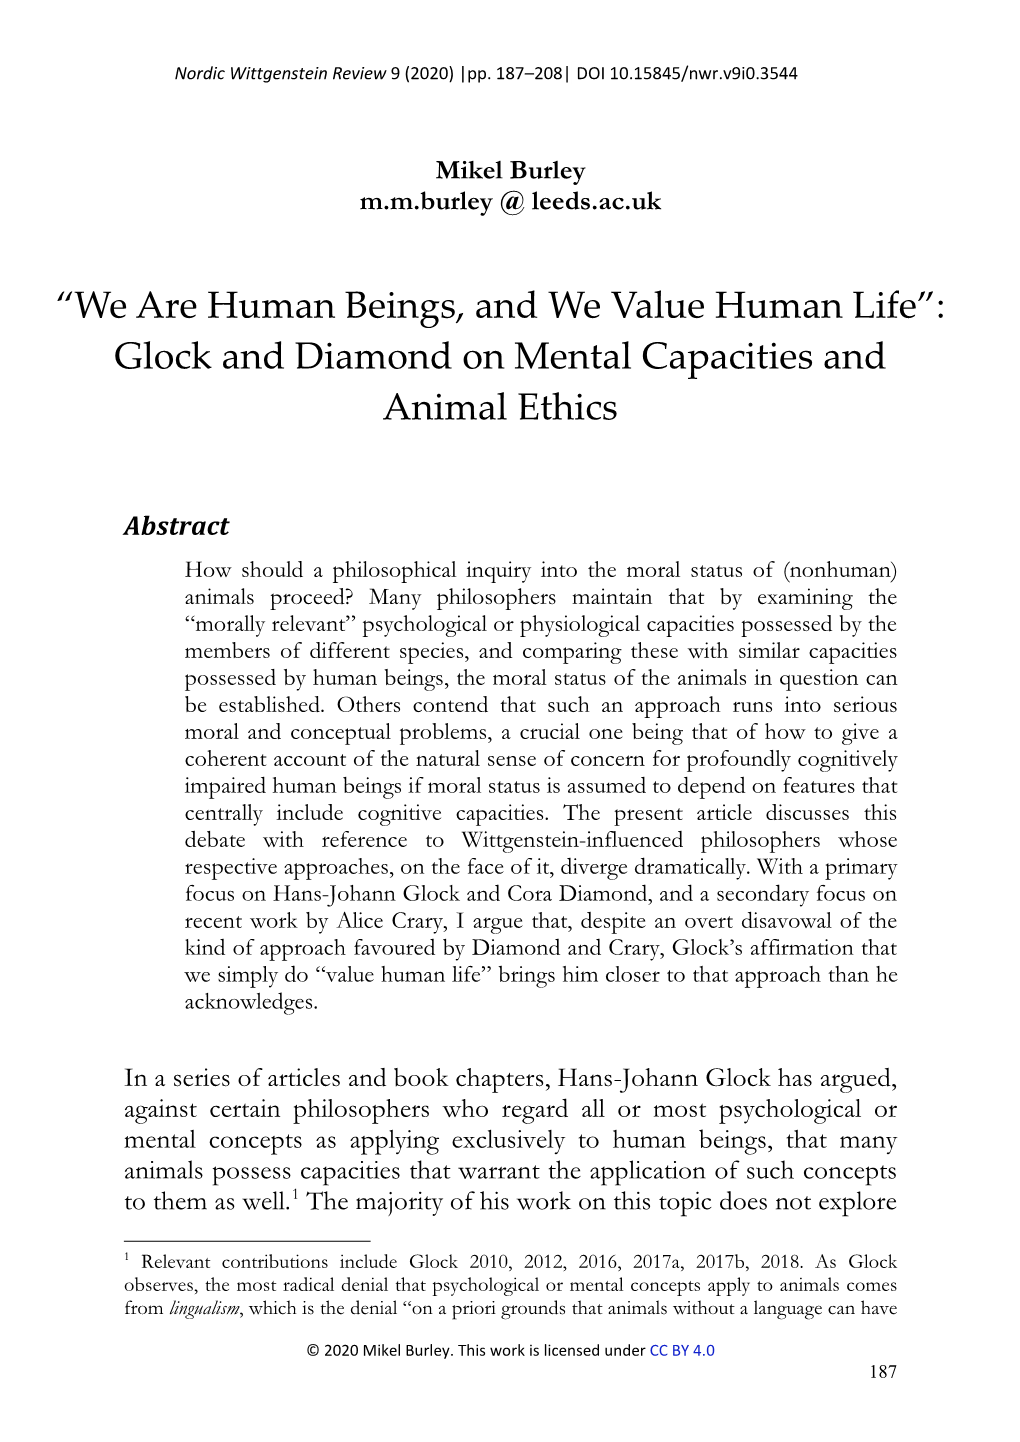 Glock and Diamond on Mental Capacities and Animal Ethics